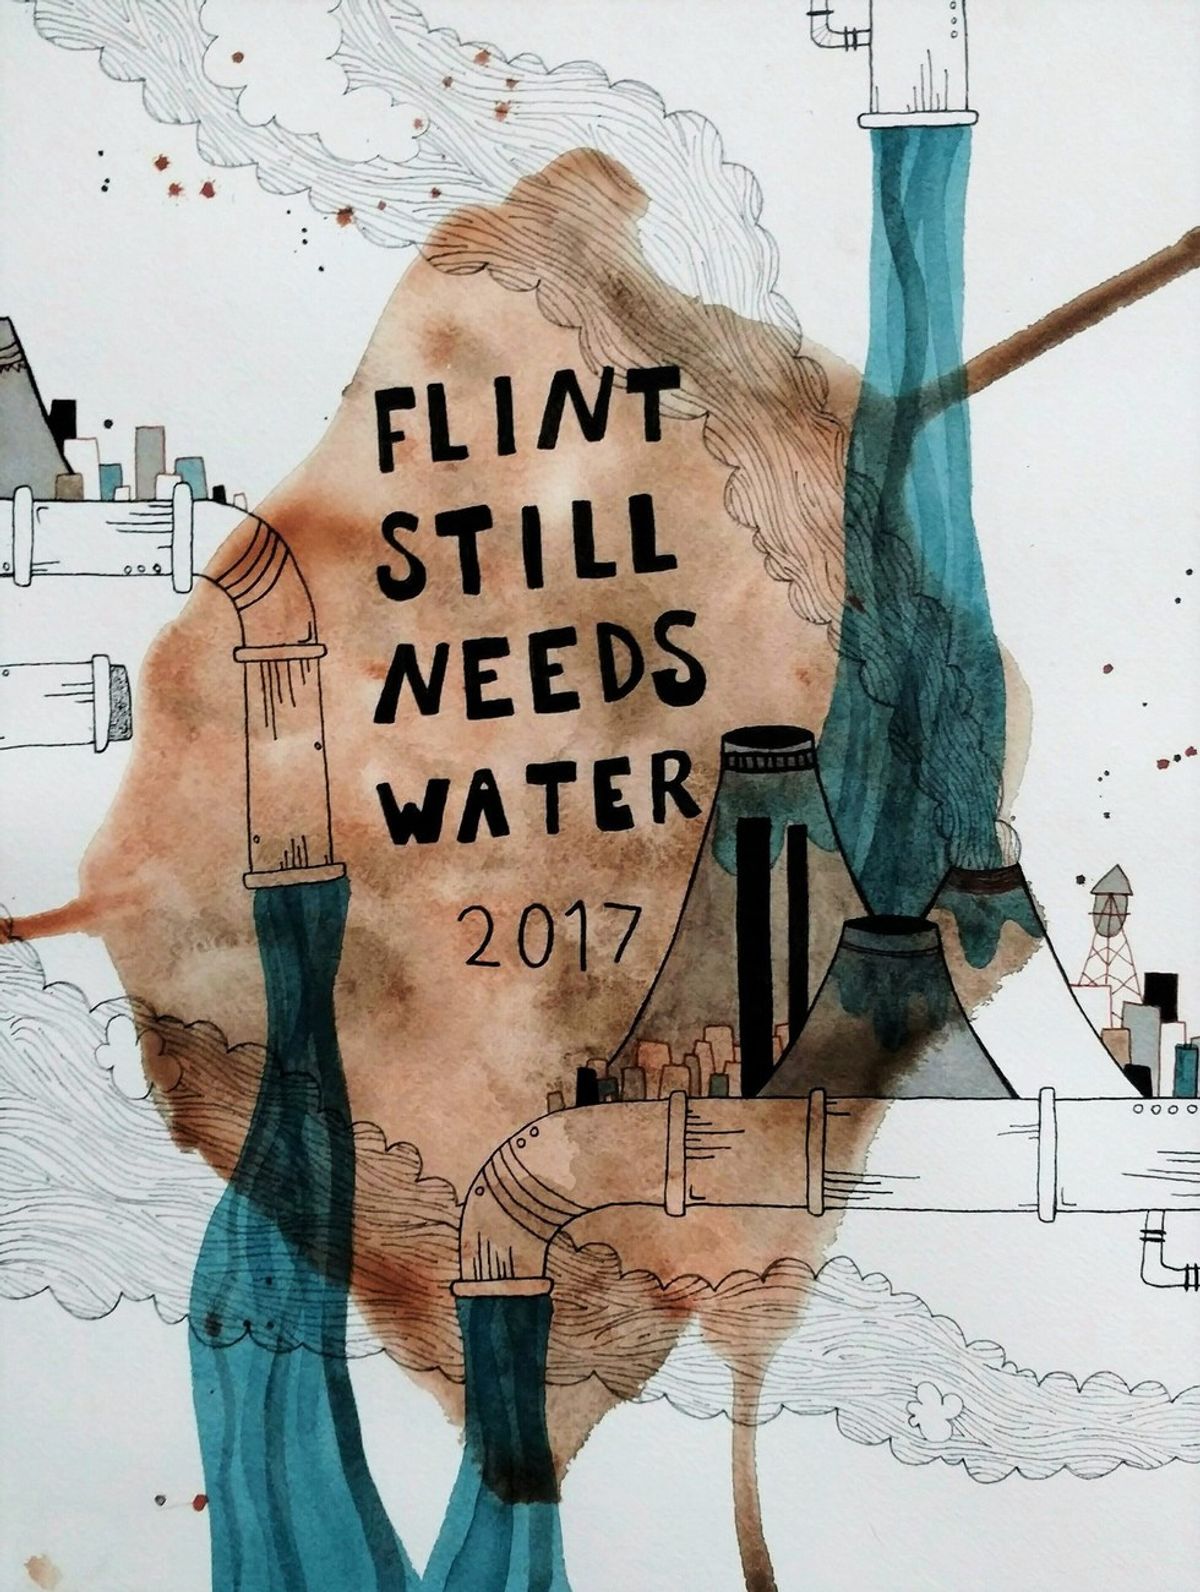 In Case You Forgot, Flint Still Needs Water